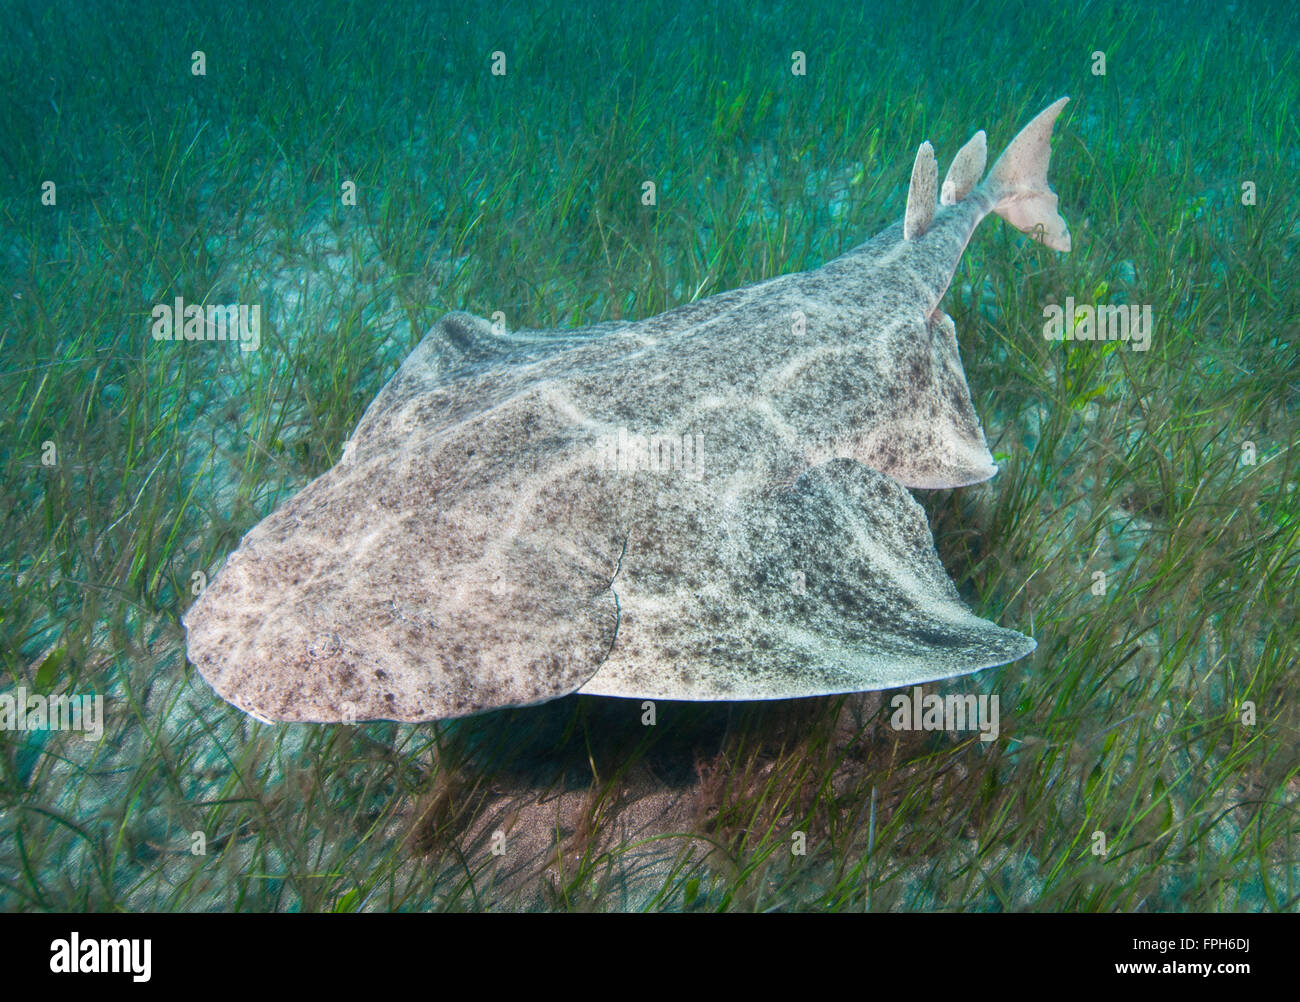 Common Angel Shark (Squatina squatina) swimming over sea grass. Stock Photo